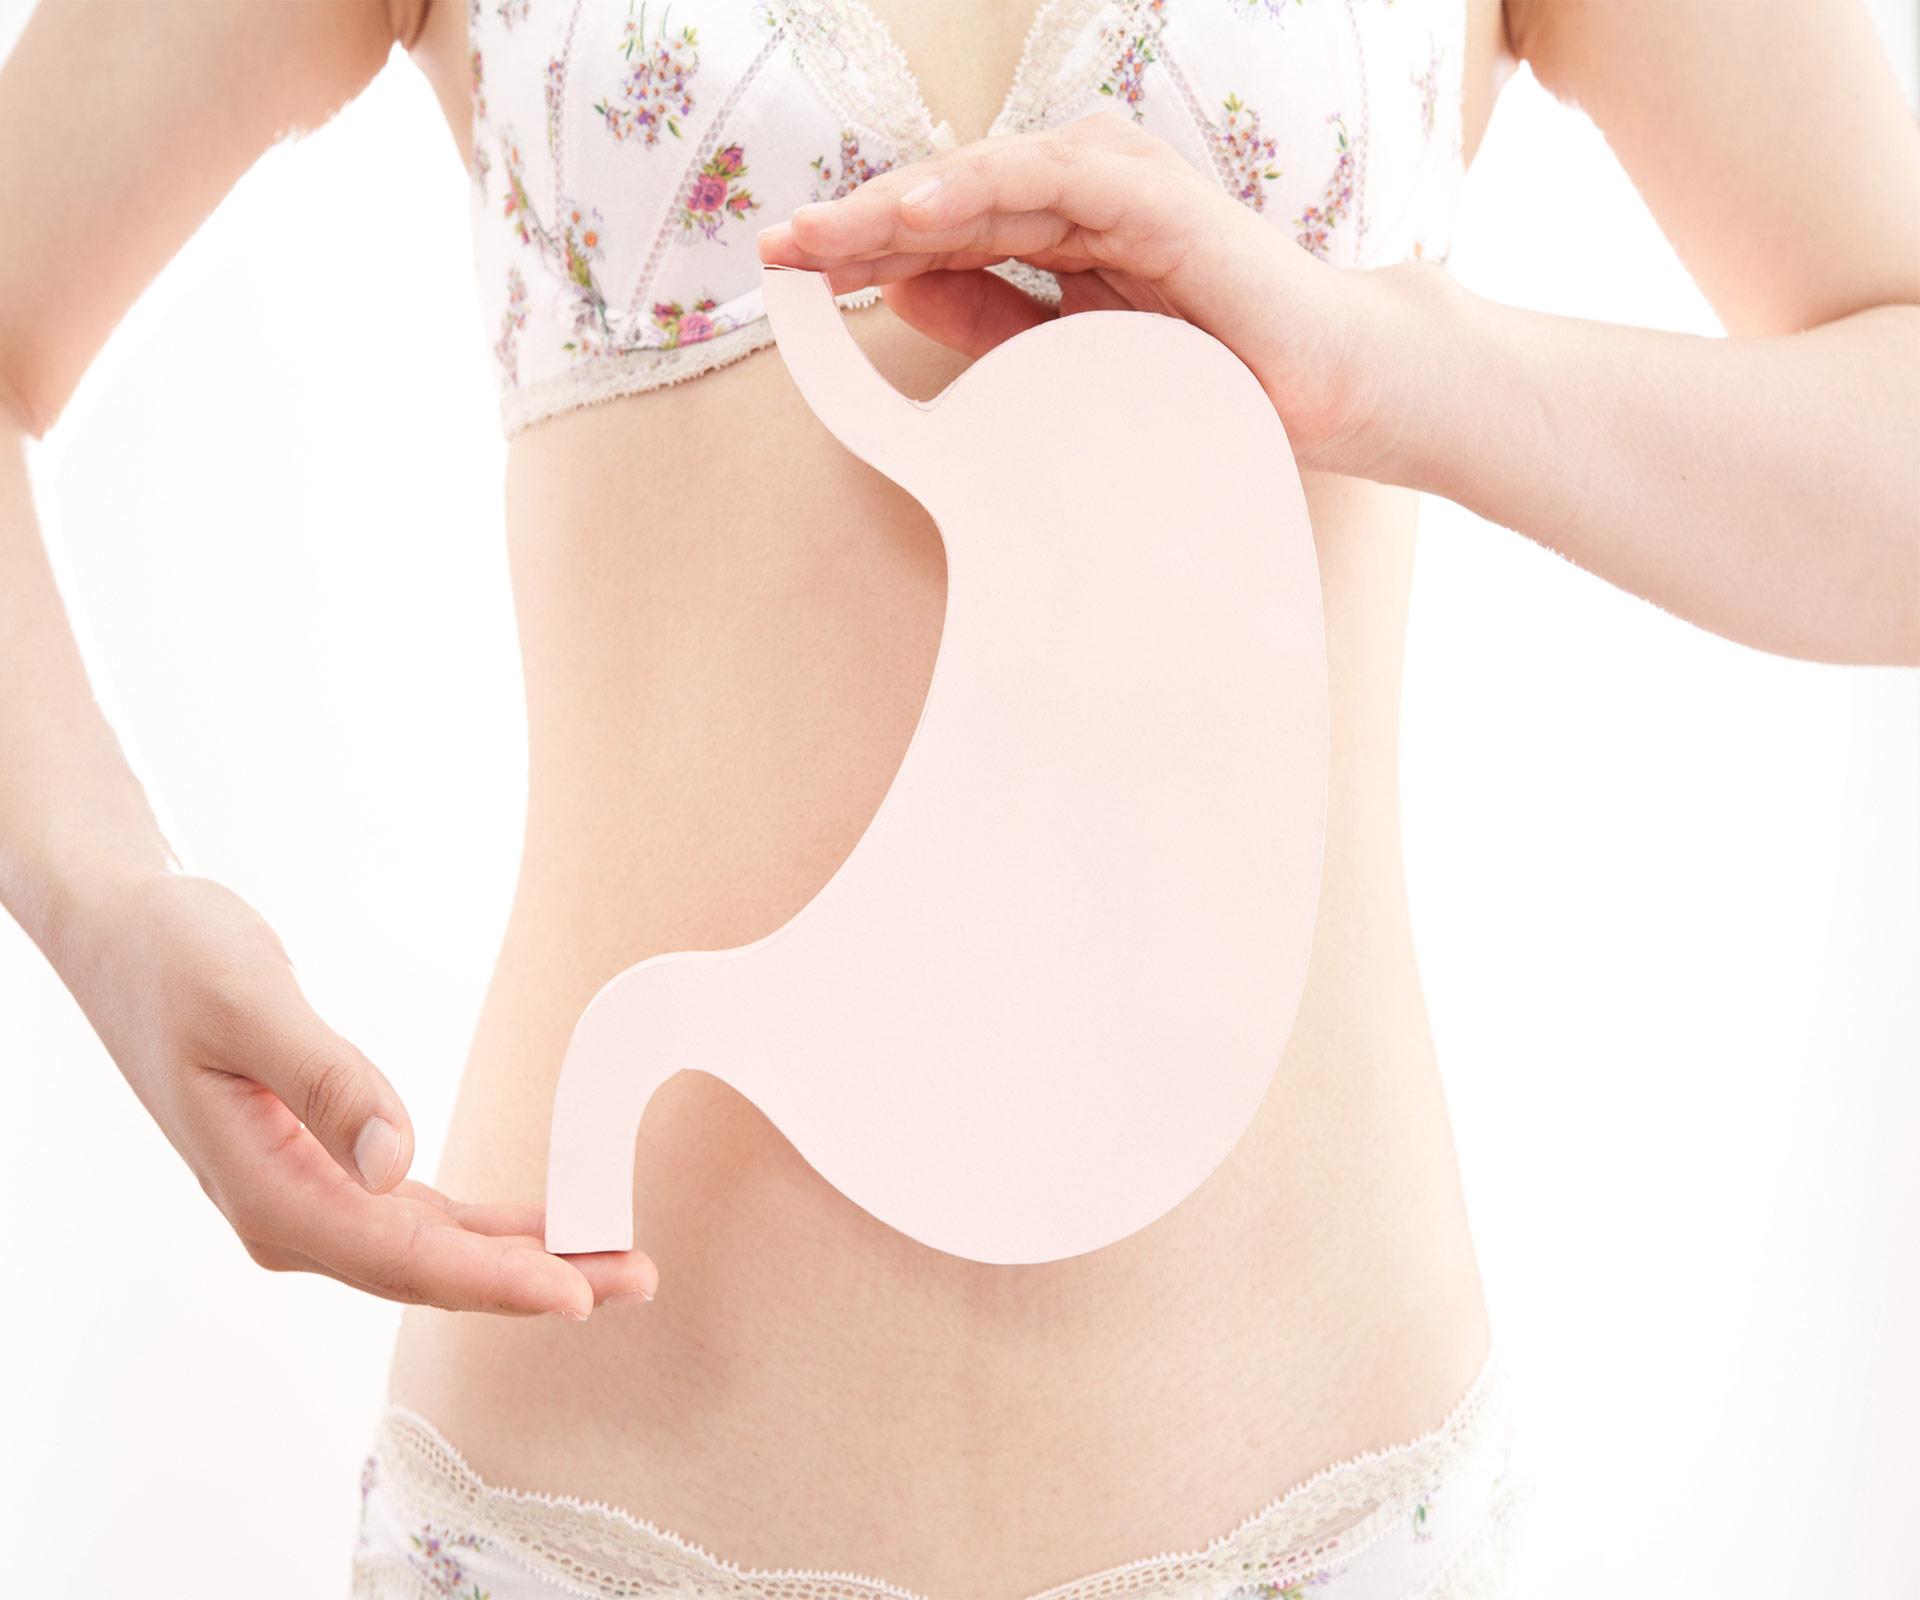 10 symptoms of an unhealthy gut